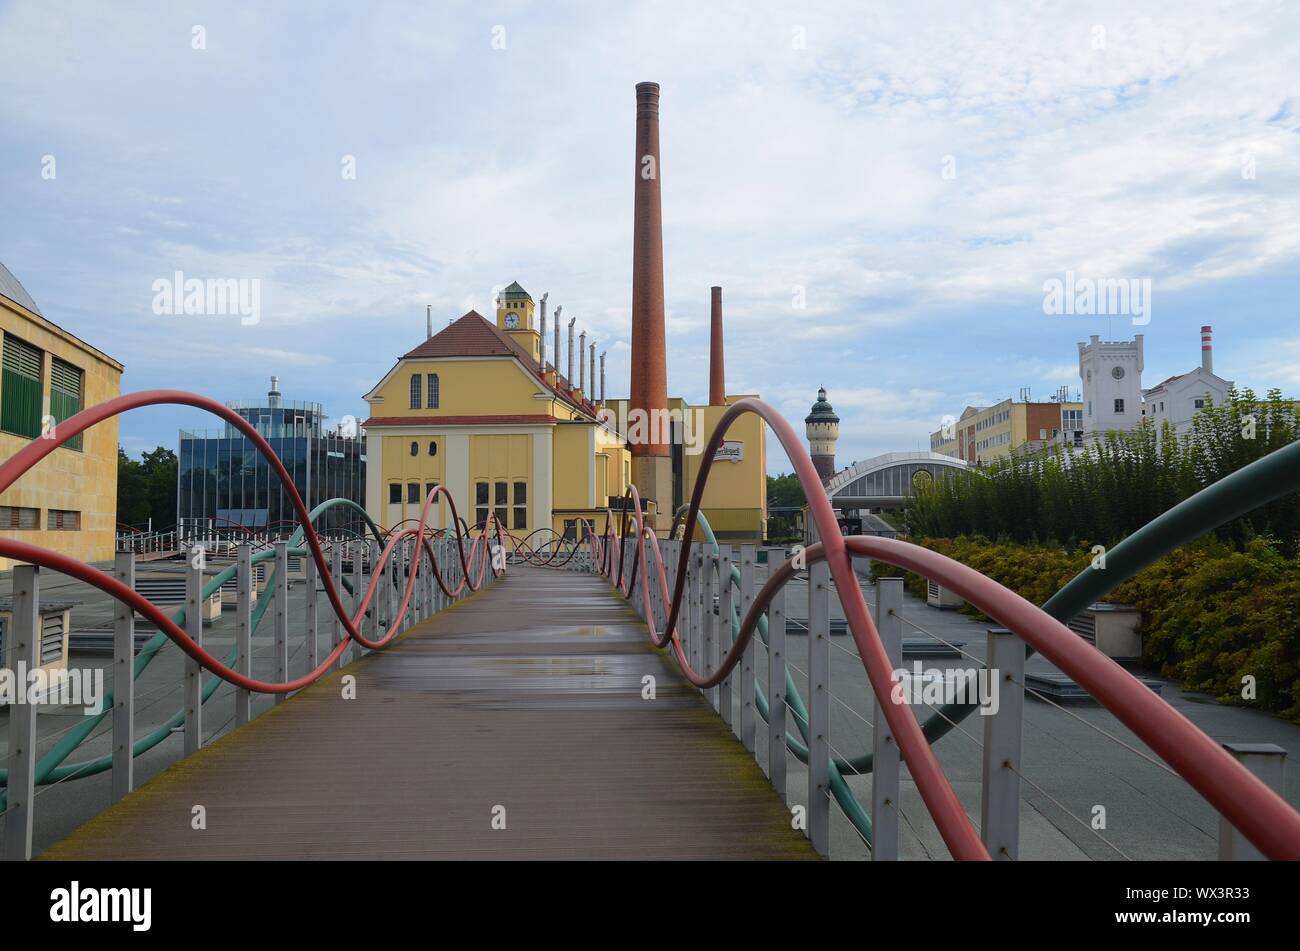 Pilzen (Pilsen), Tschechien: die Prazdroj-Brauerei Foto Stock